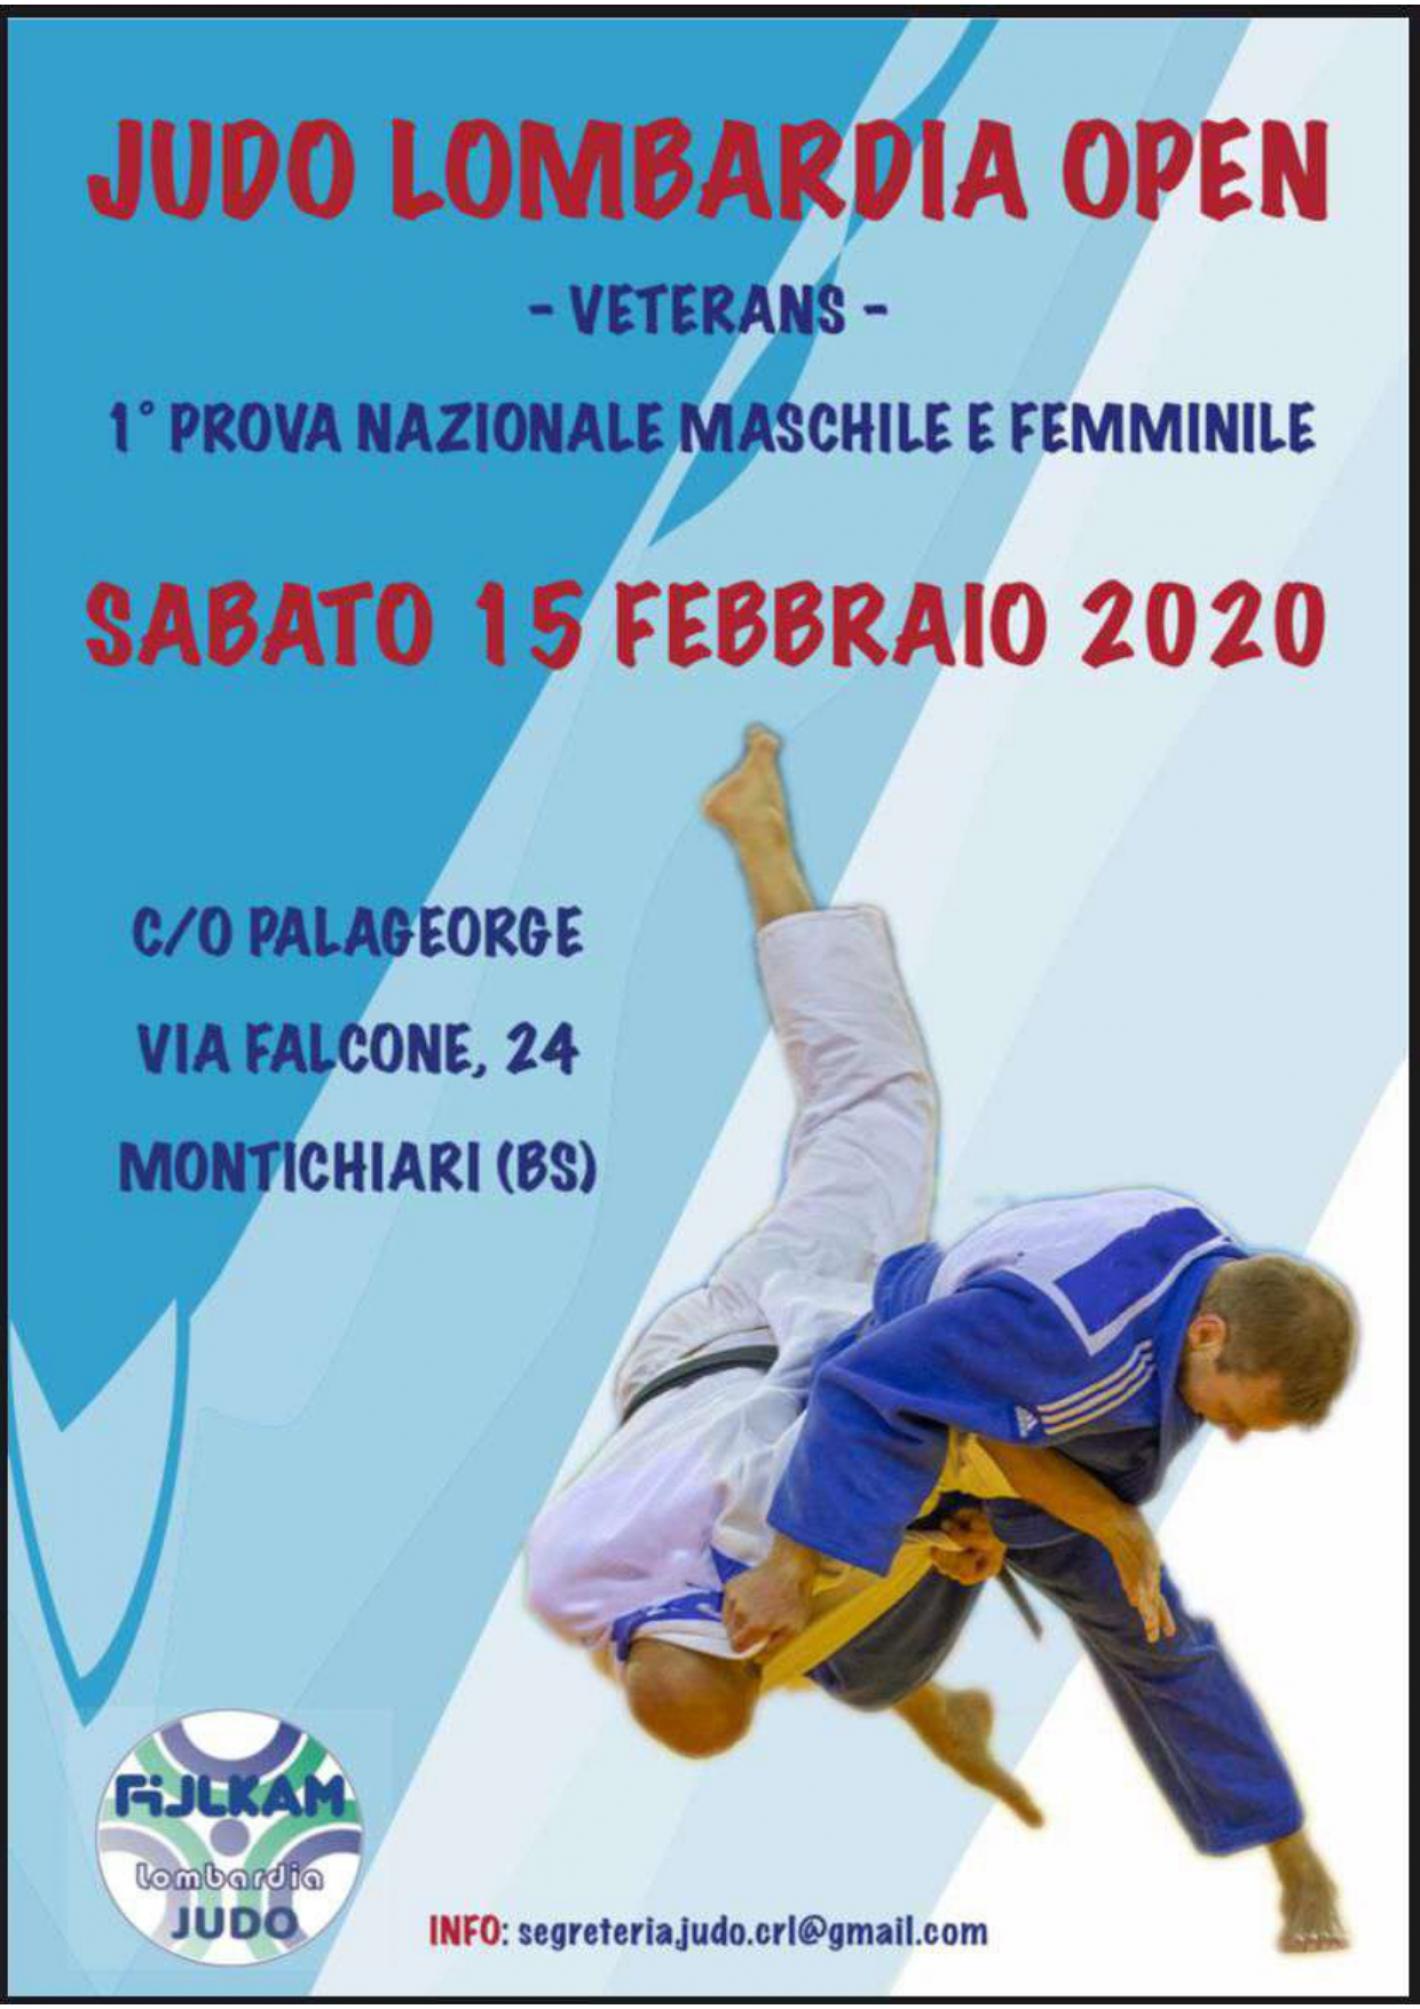 images/friuli_venezia_giulia/medium/3_Judo_Lombardia_Open_Veterani_page-0001.jpg